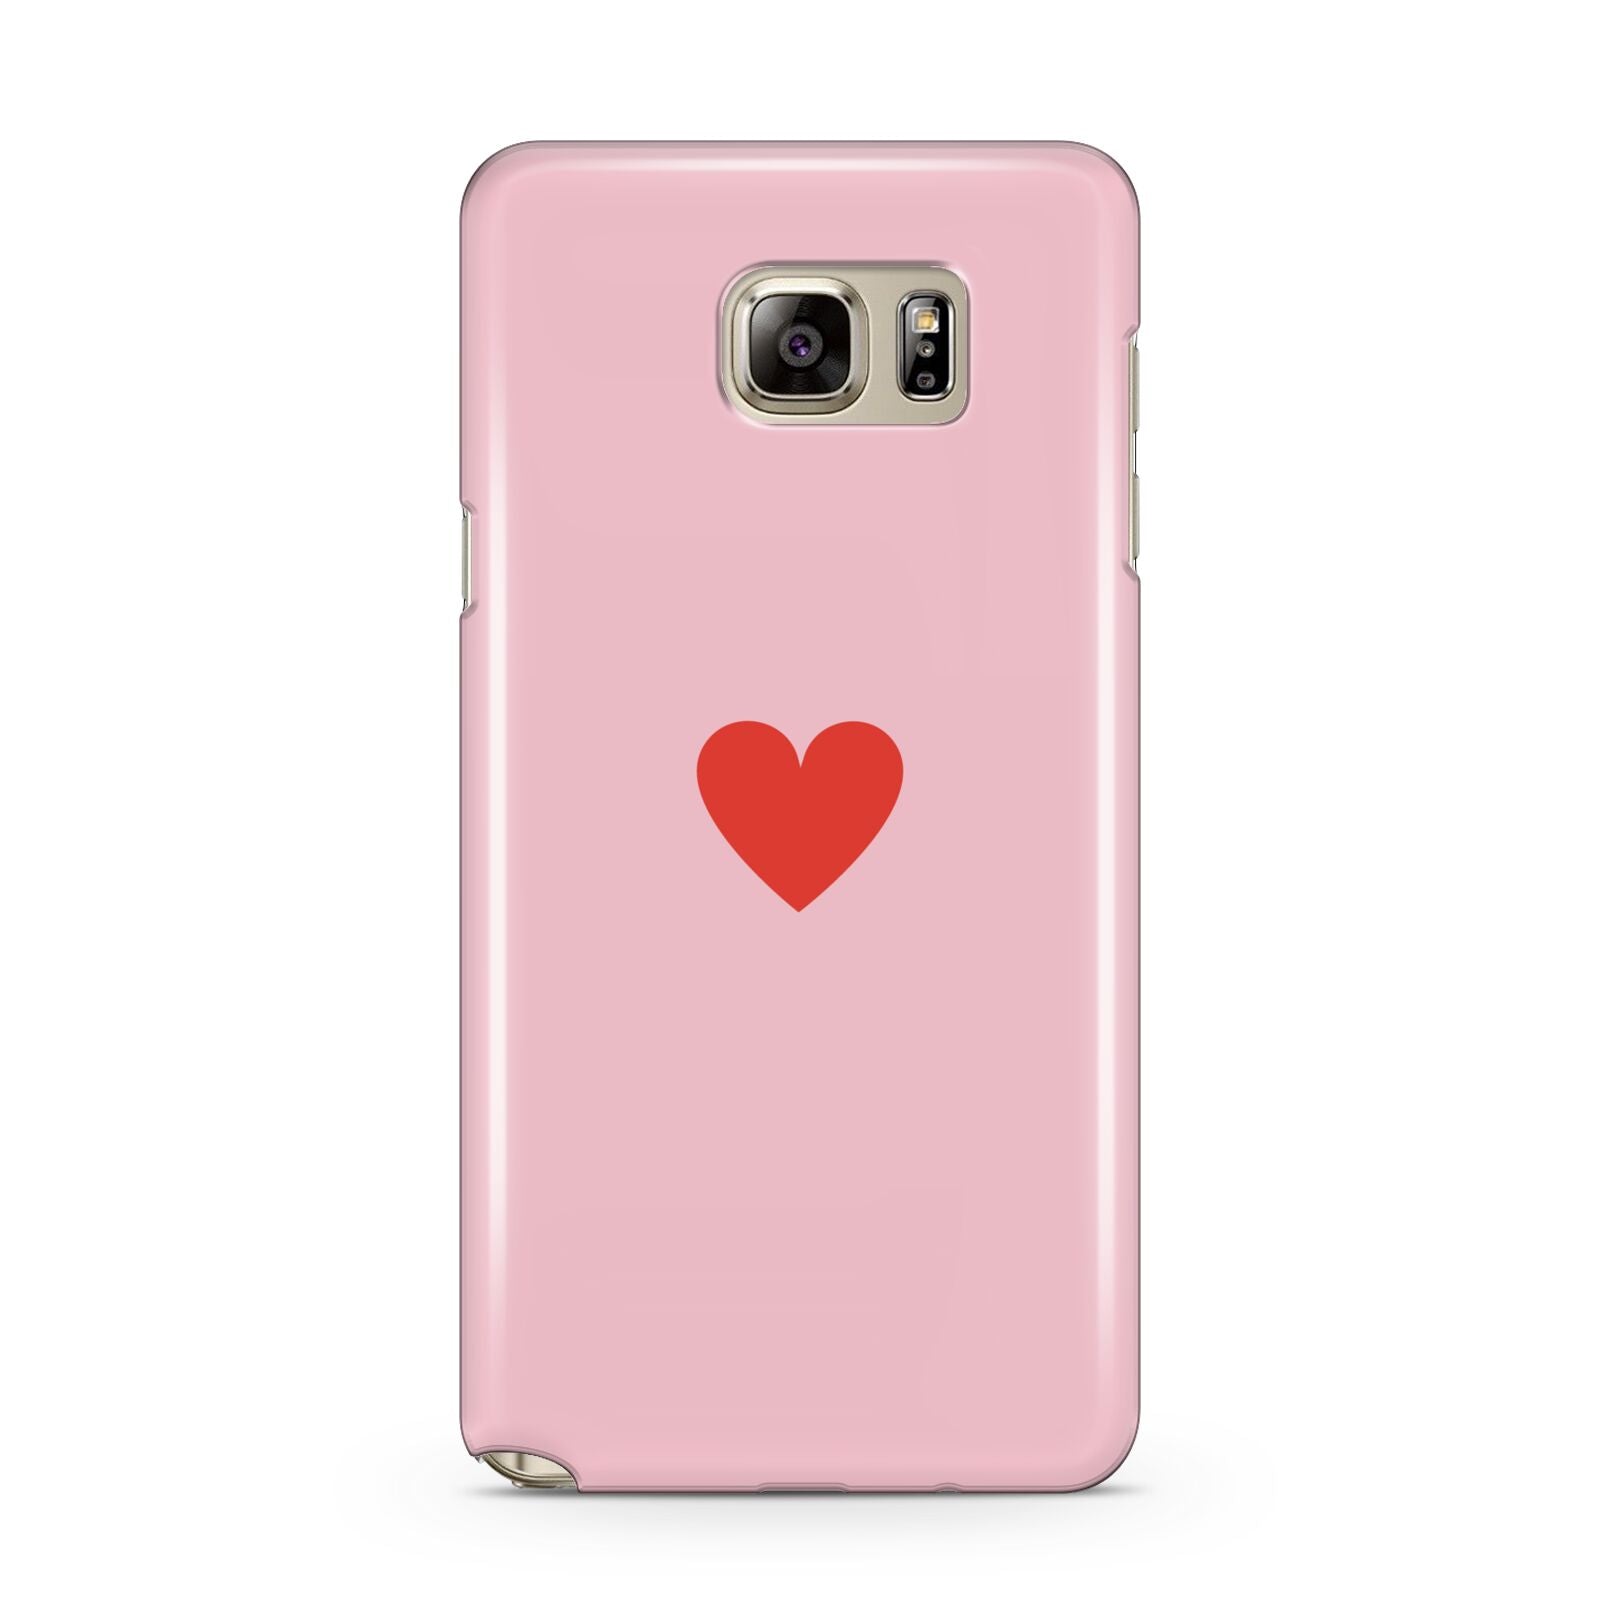 Red Heart Samsung Galaxy Note 5 Case